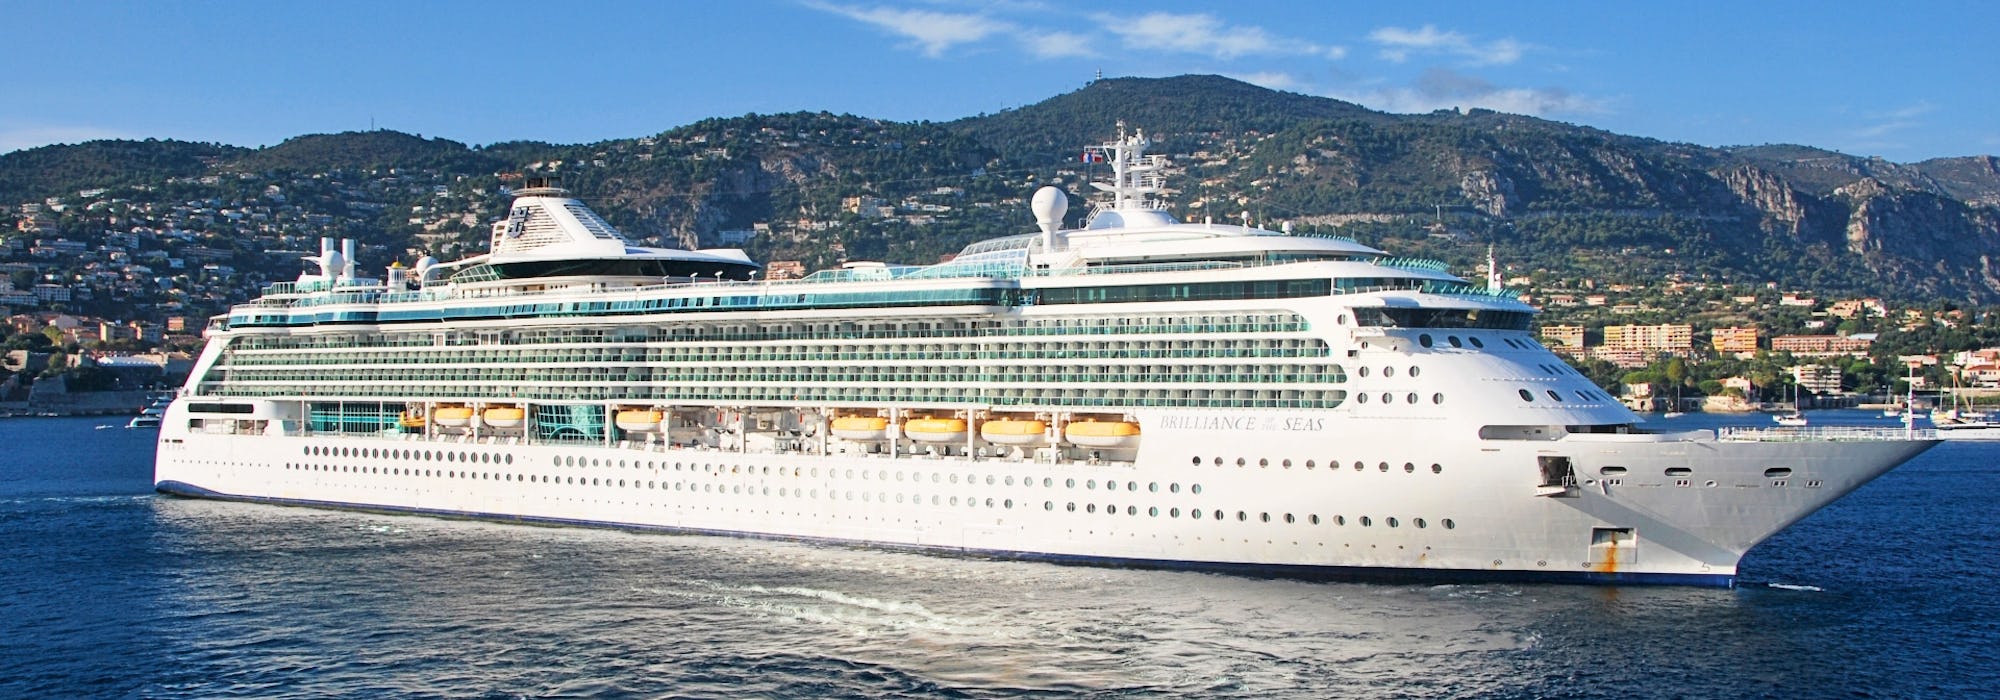 Brilliance of the Seas - Royal Caribbean